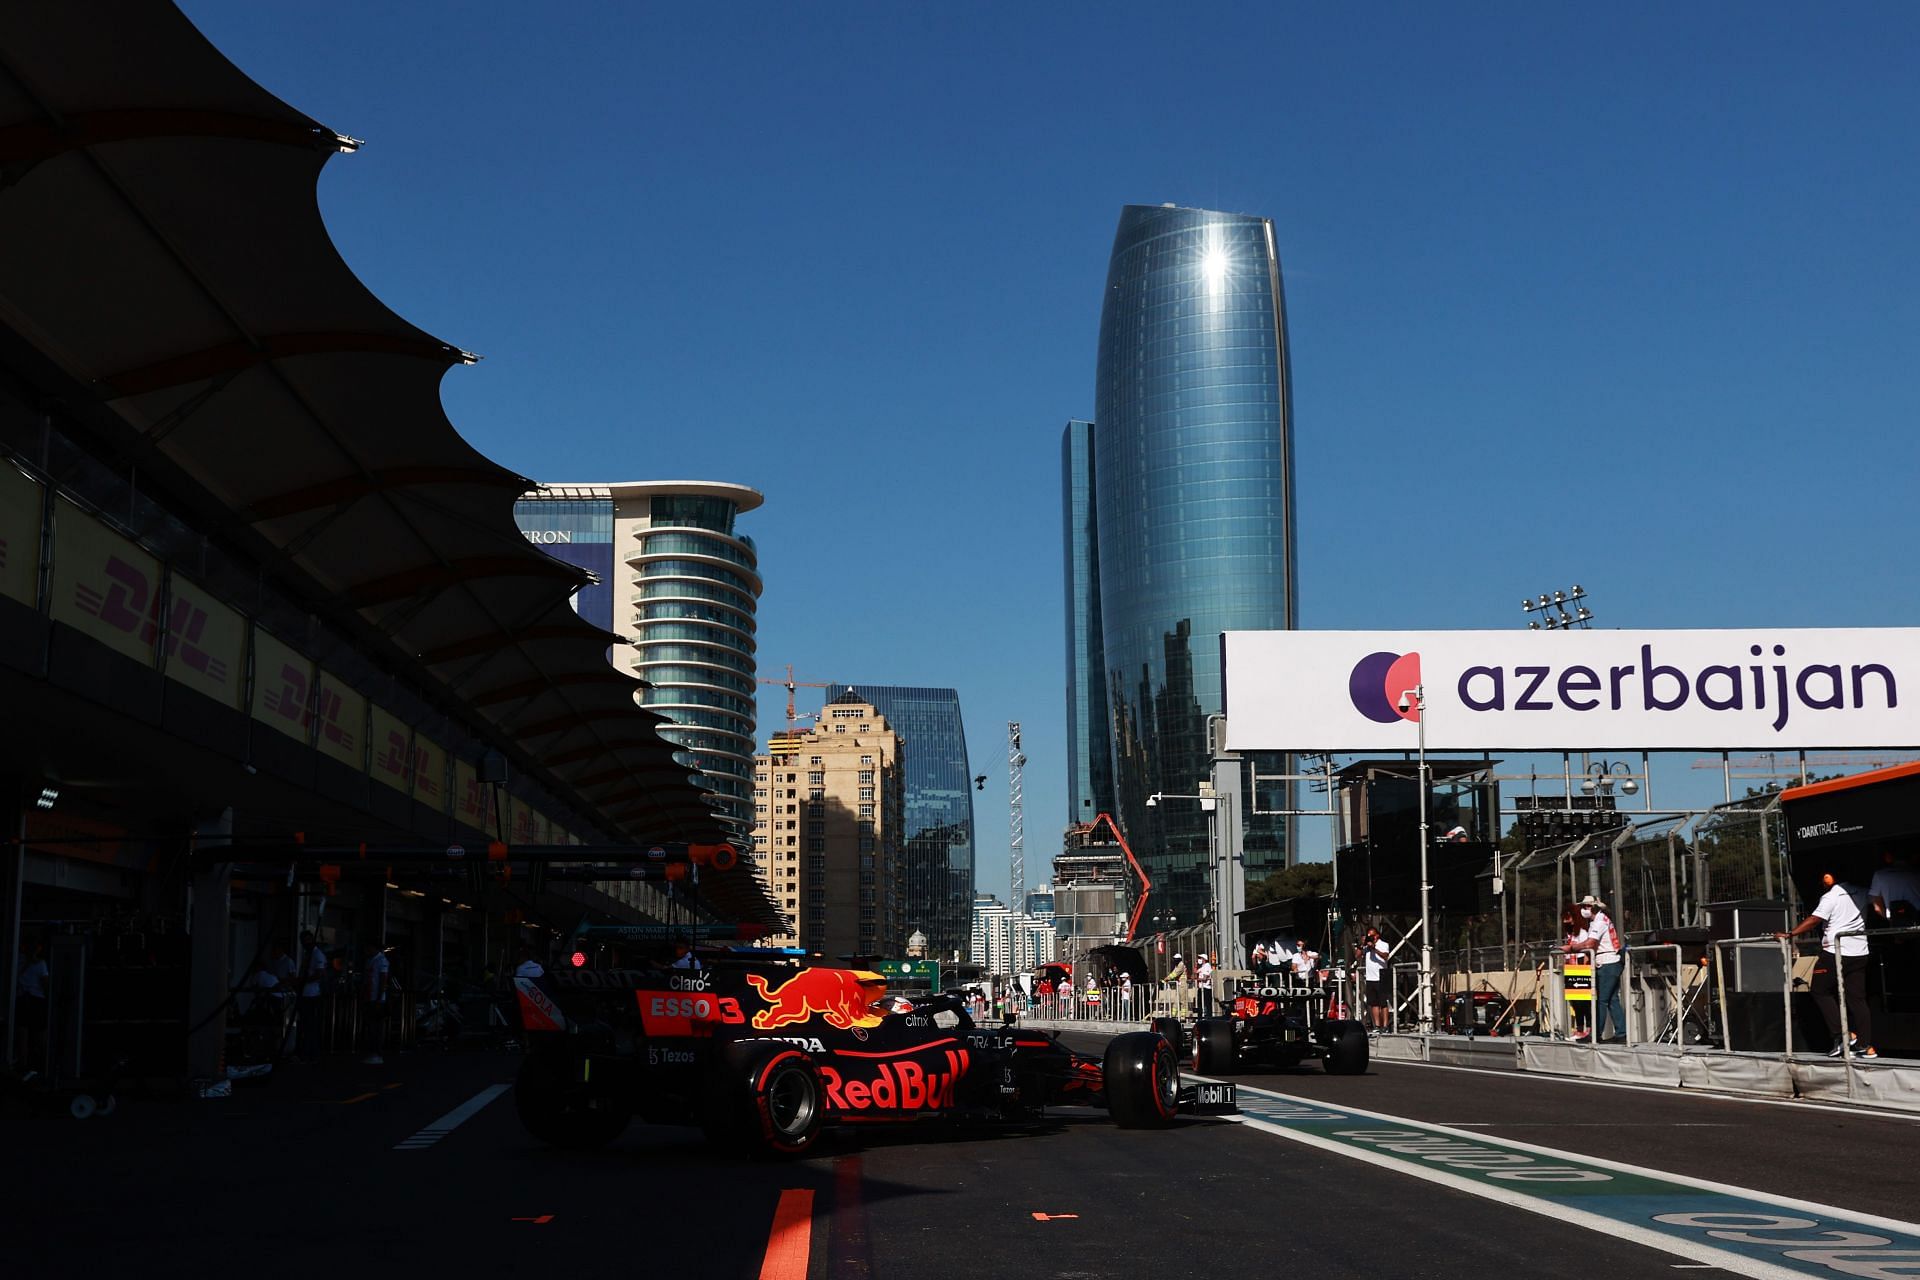 F1 Grand Prix of Azerbaijan - Baku Circuit